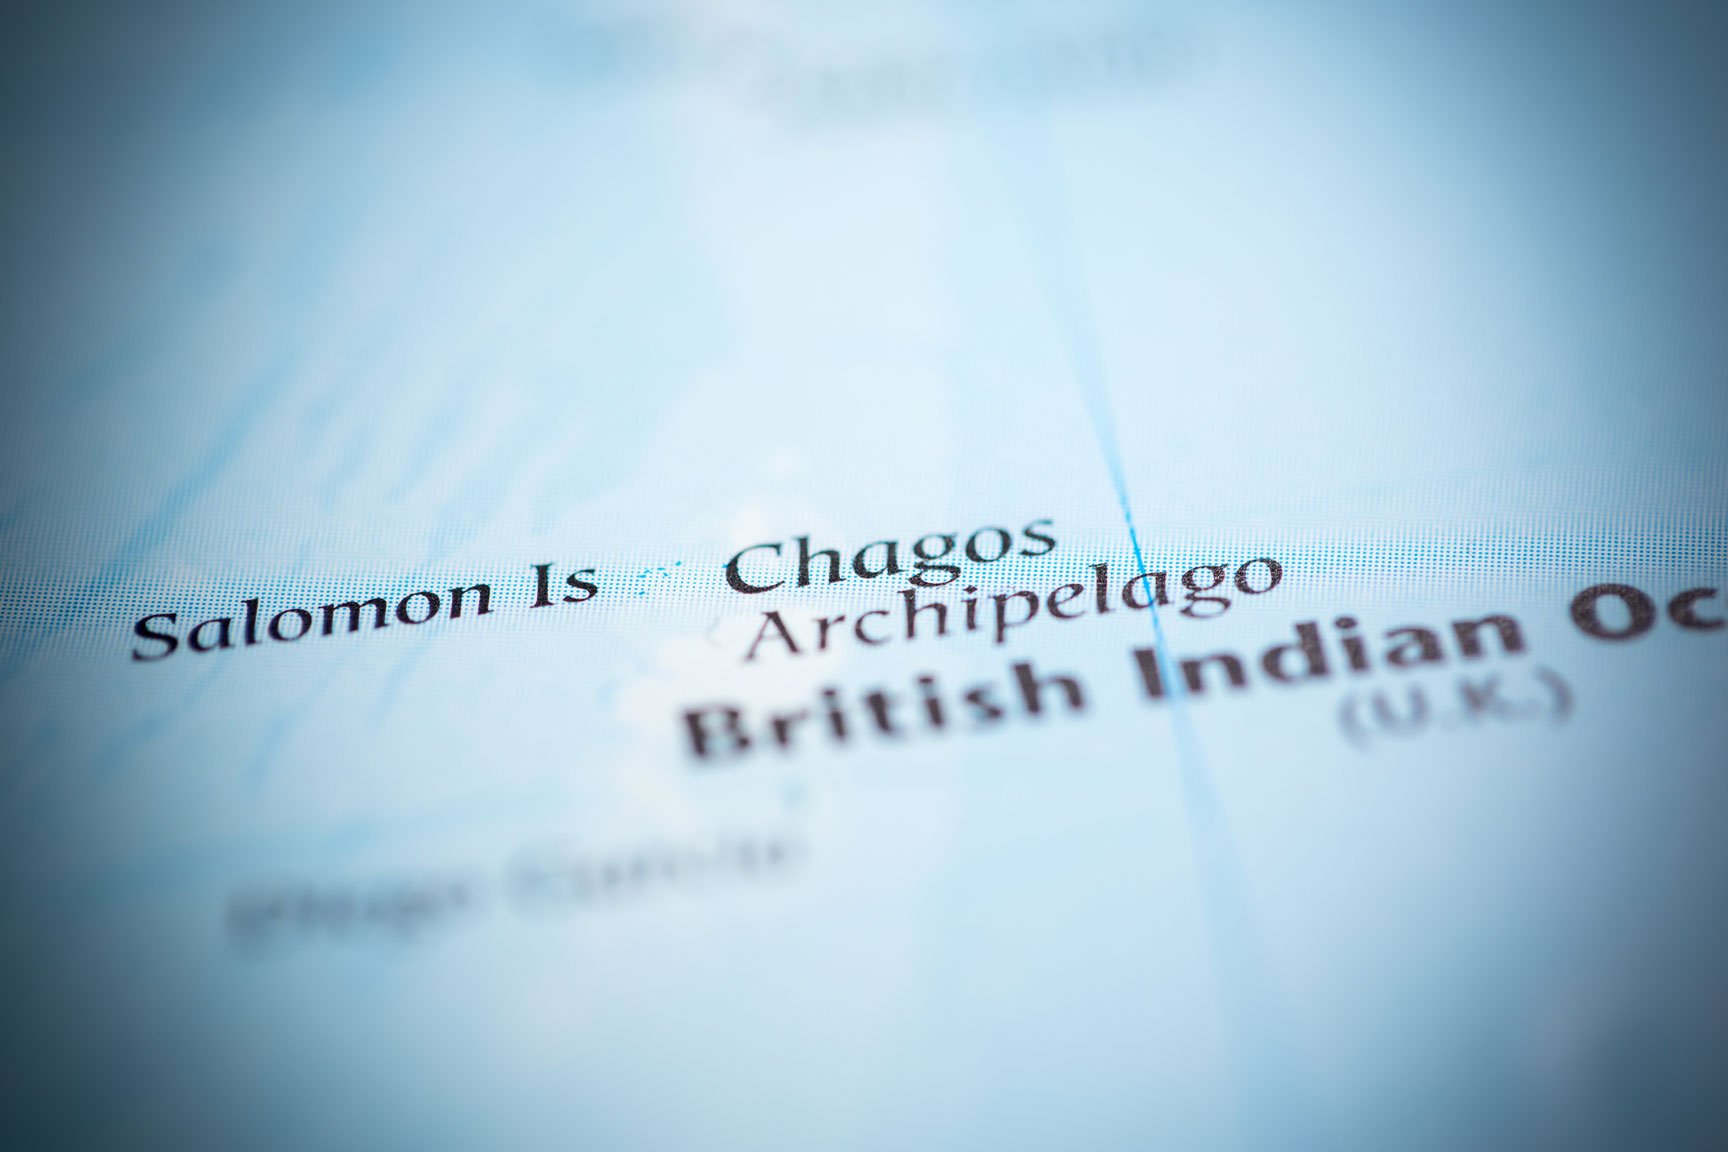 Map of Chagos islands